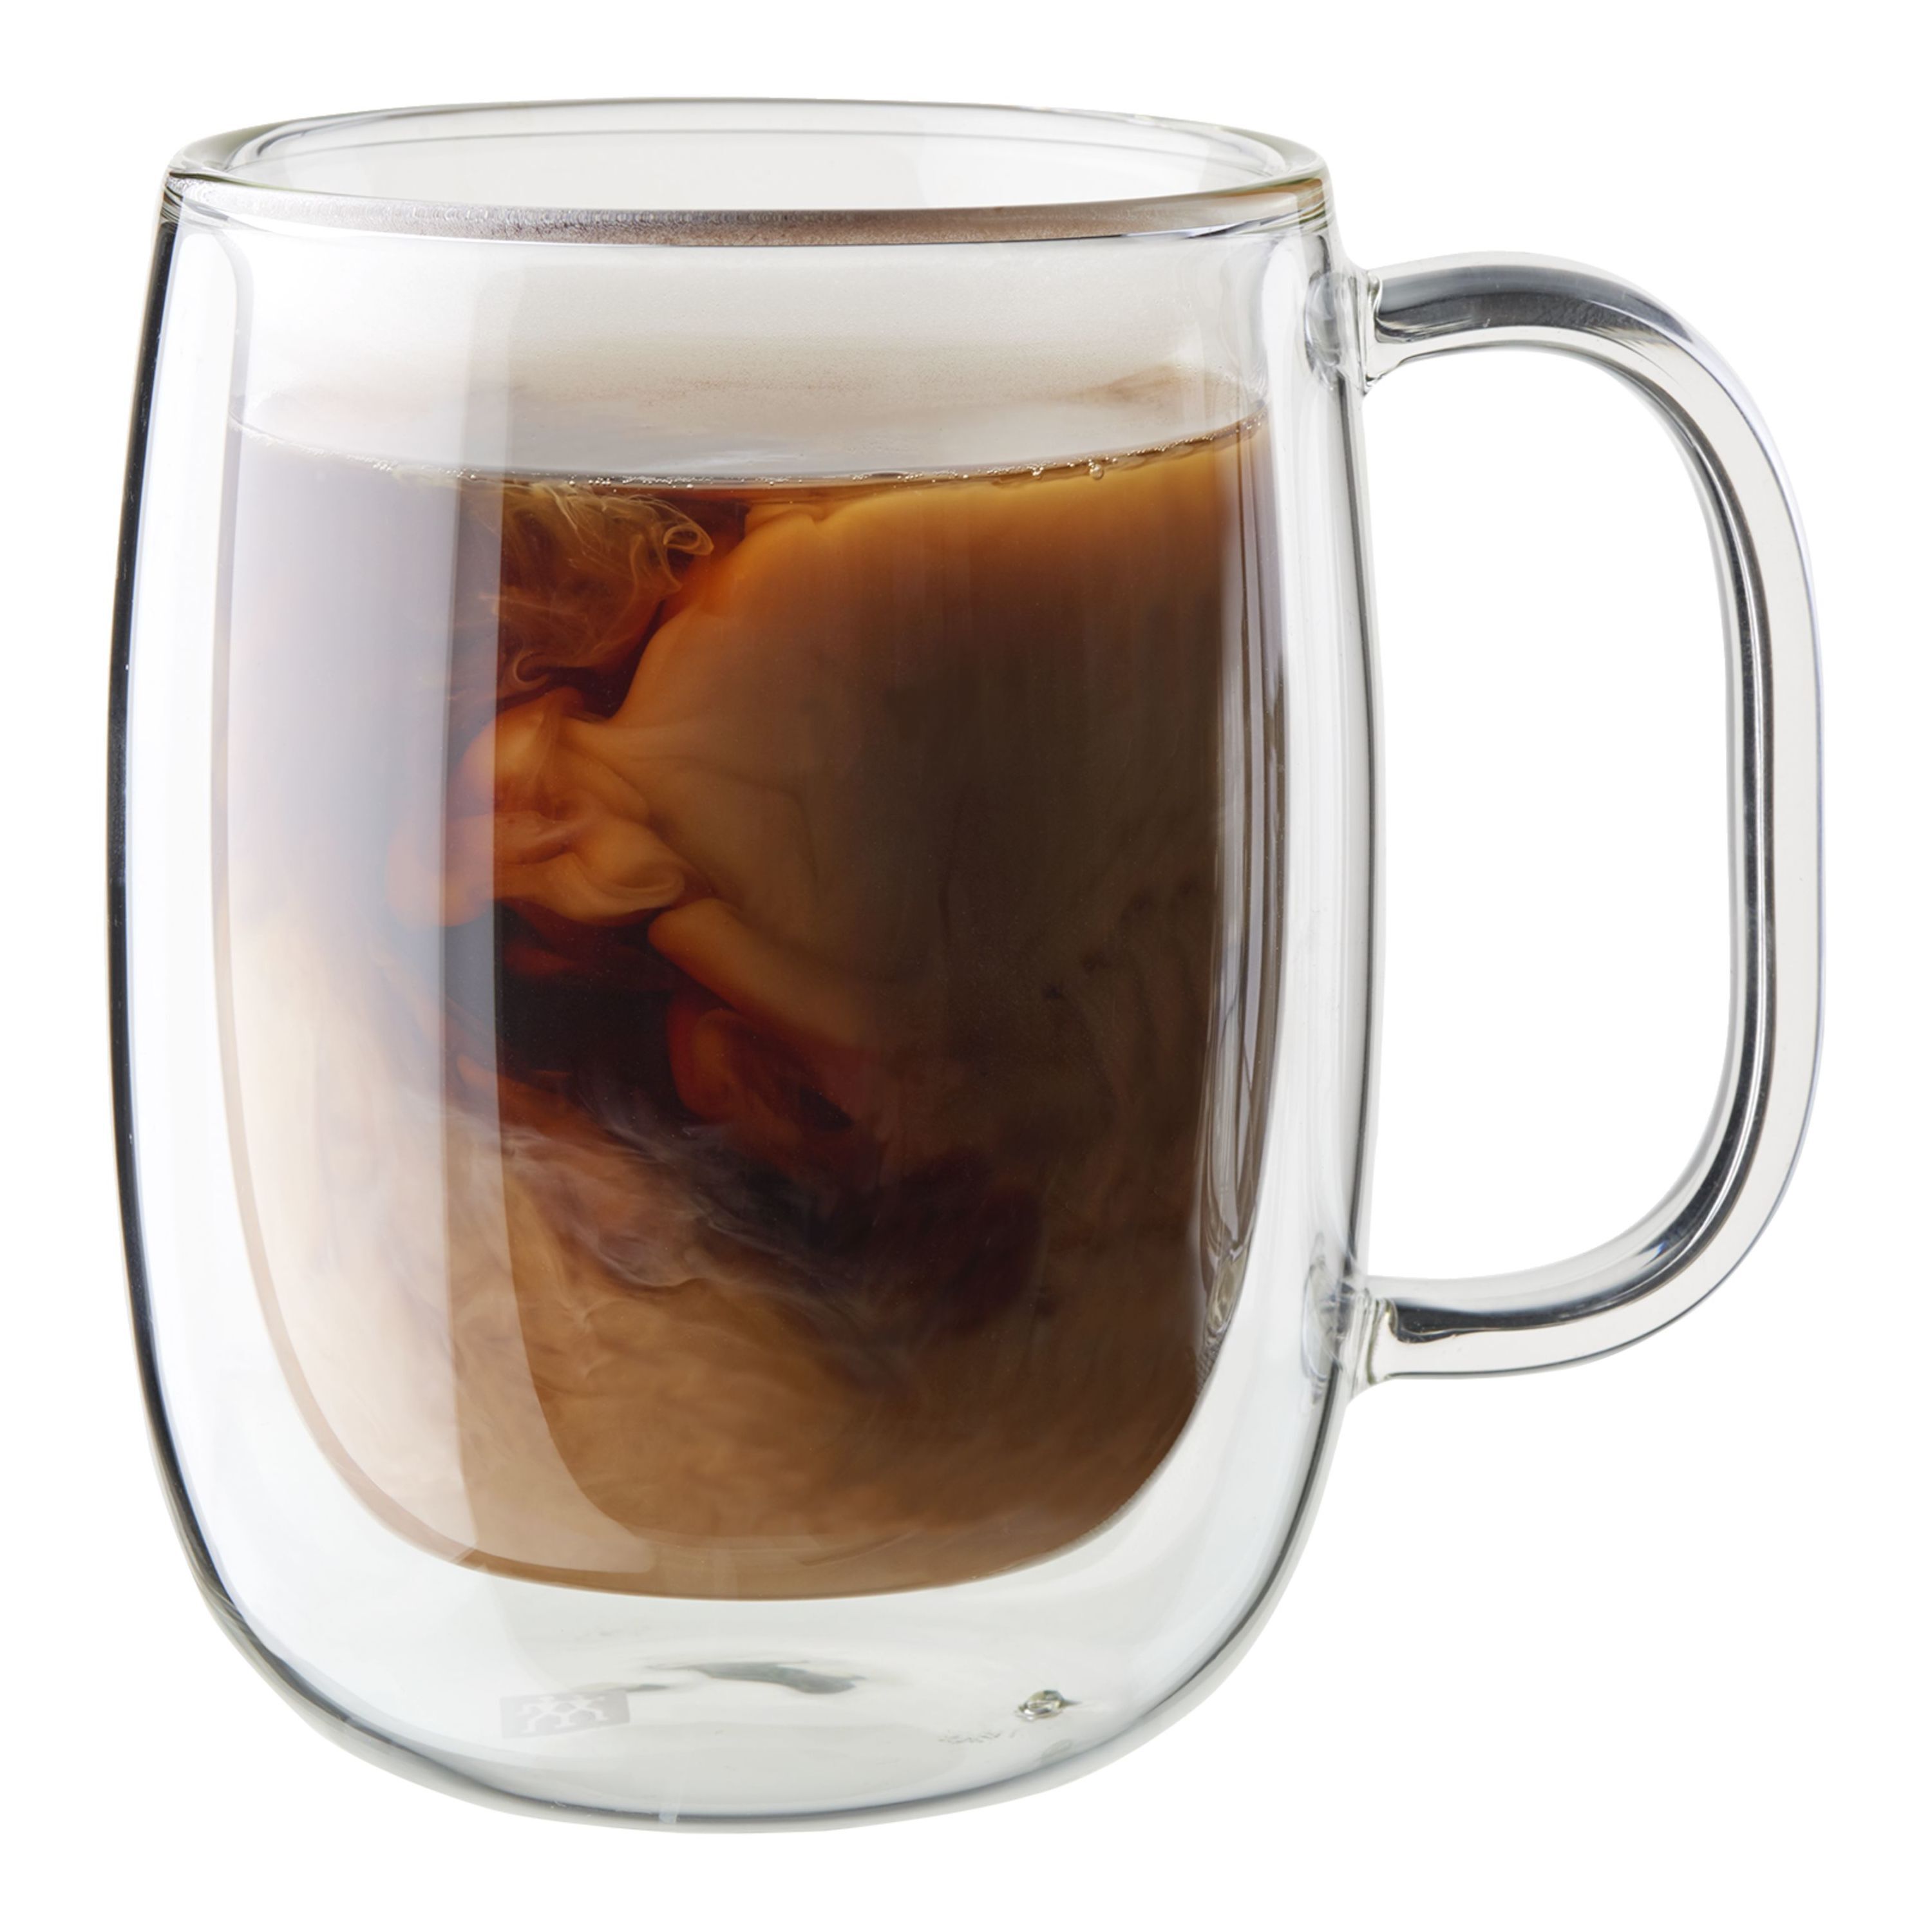 glass coffee cup set